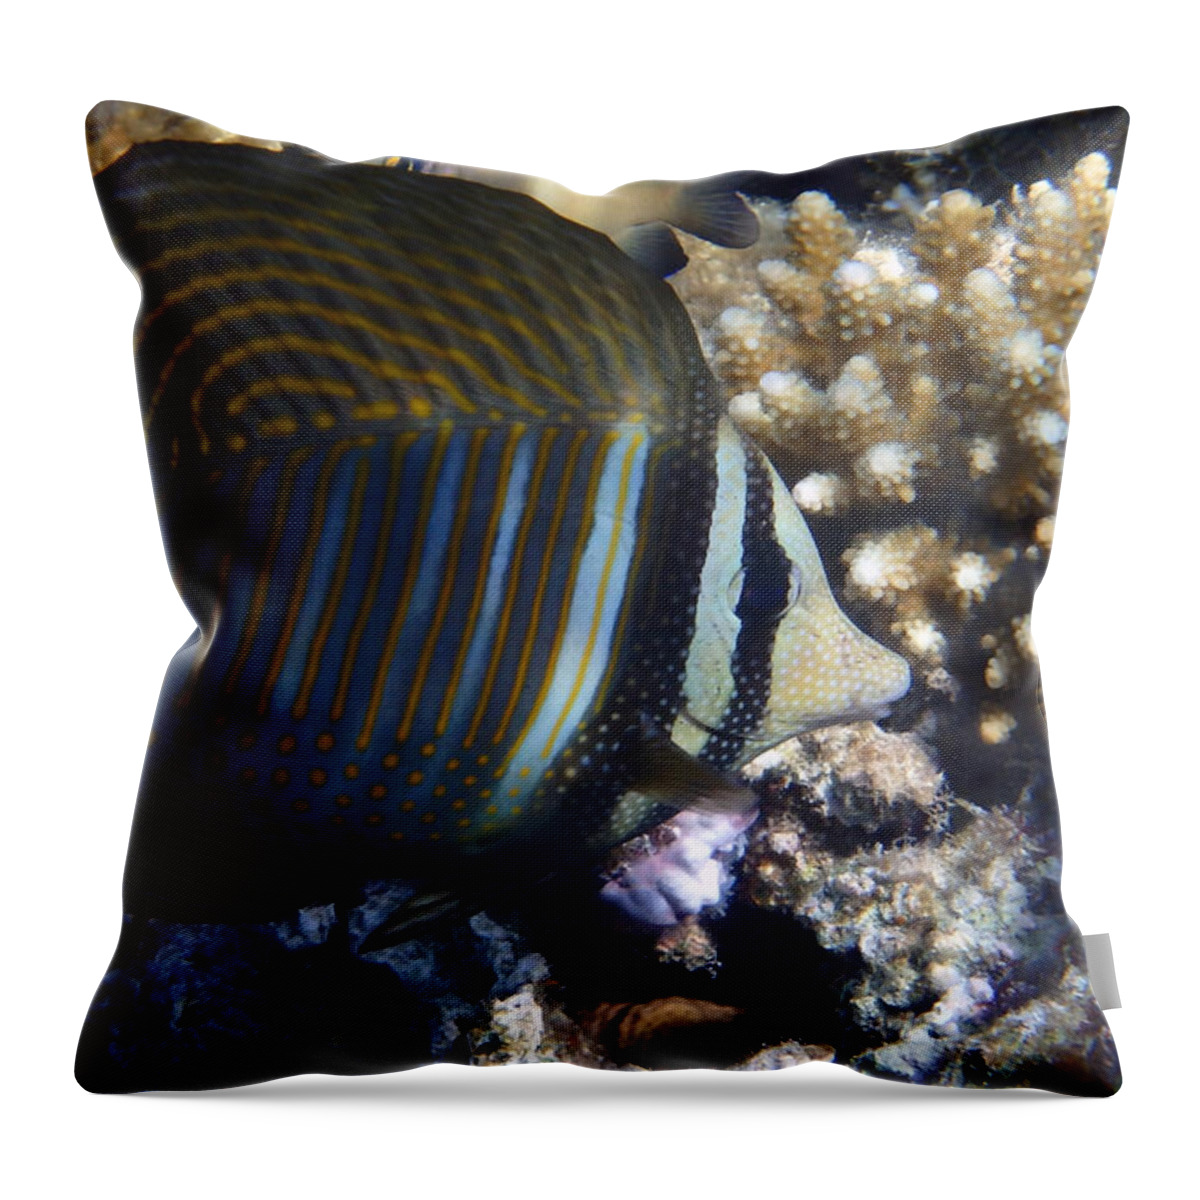 Sea Throw Pillow featuring the photograph Sailfin Tang by Johanna Hurmerinta